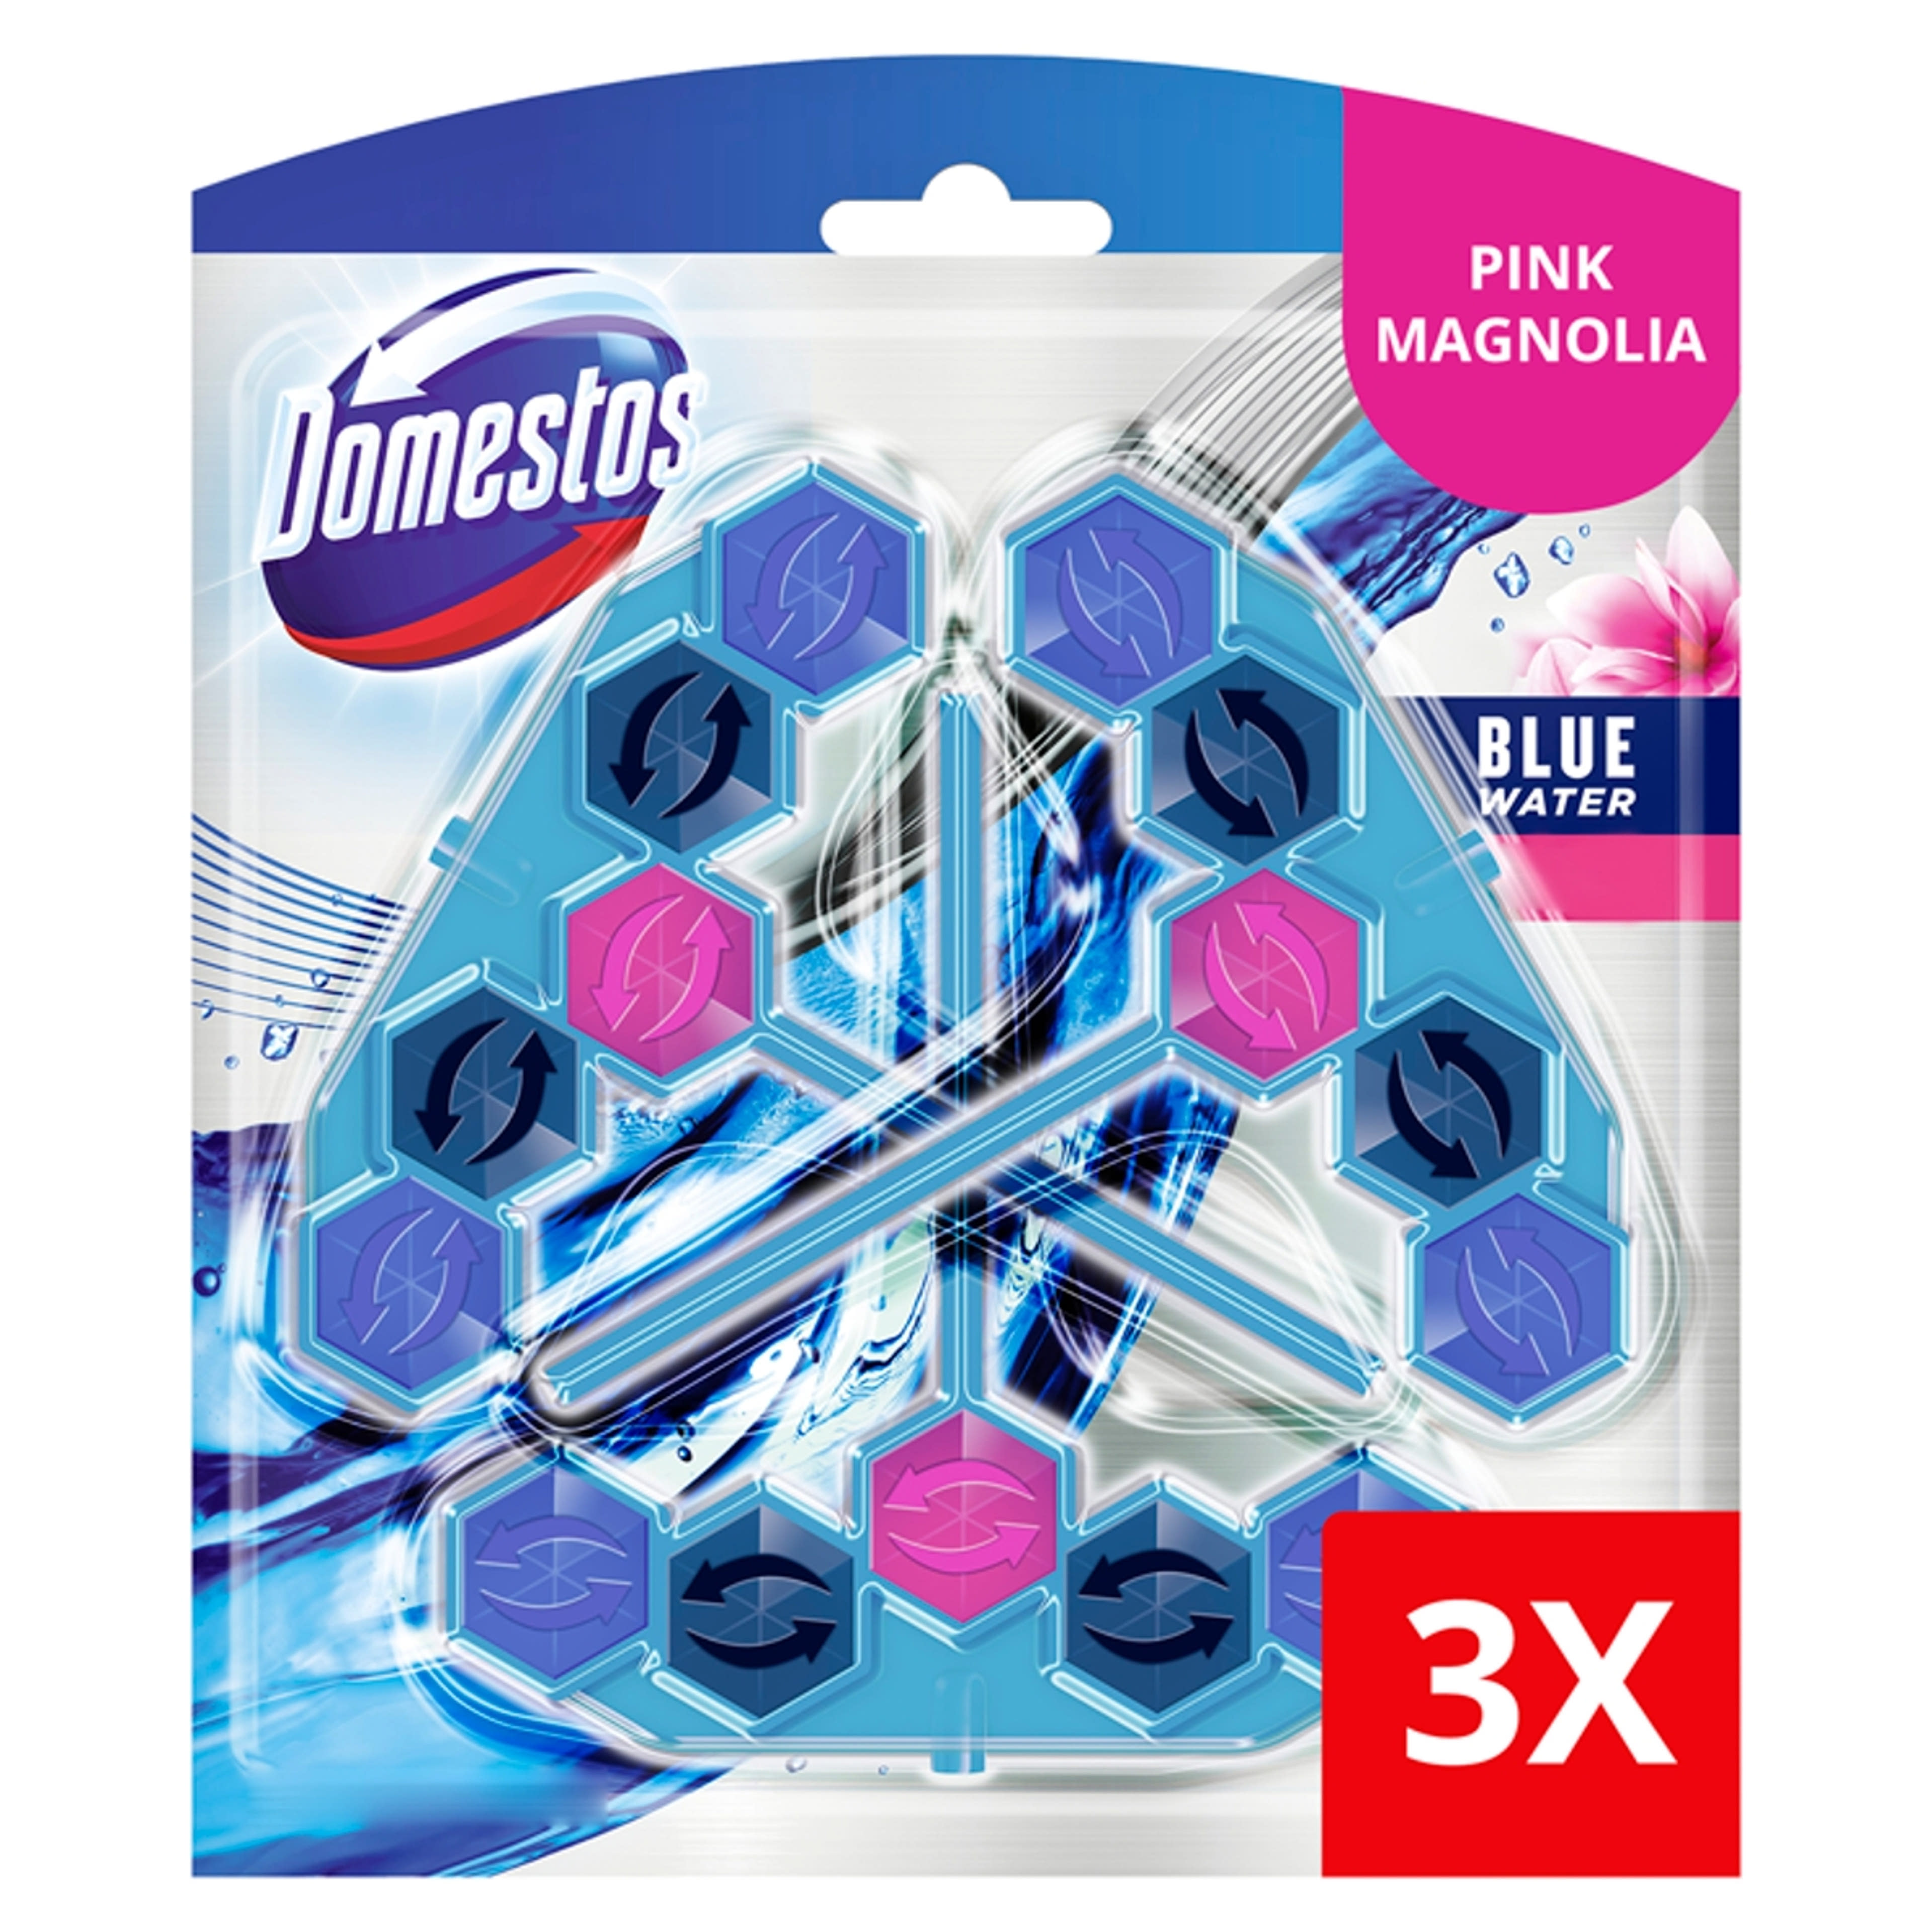 Domestos Power5 ACTIVE blue water pink (3x53g) - 159 g-2